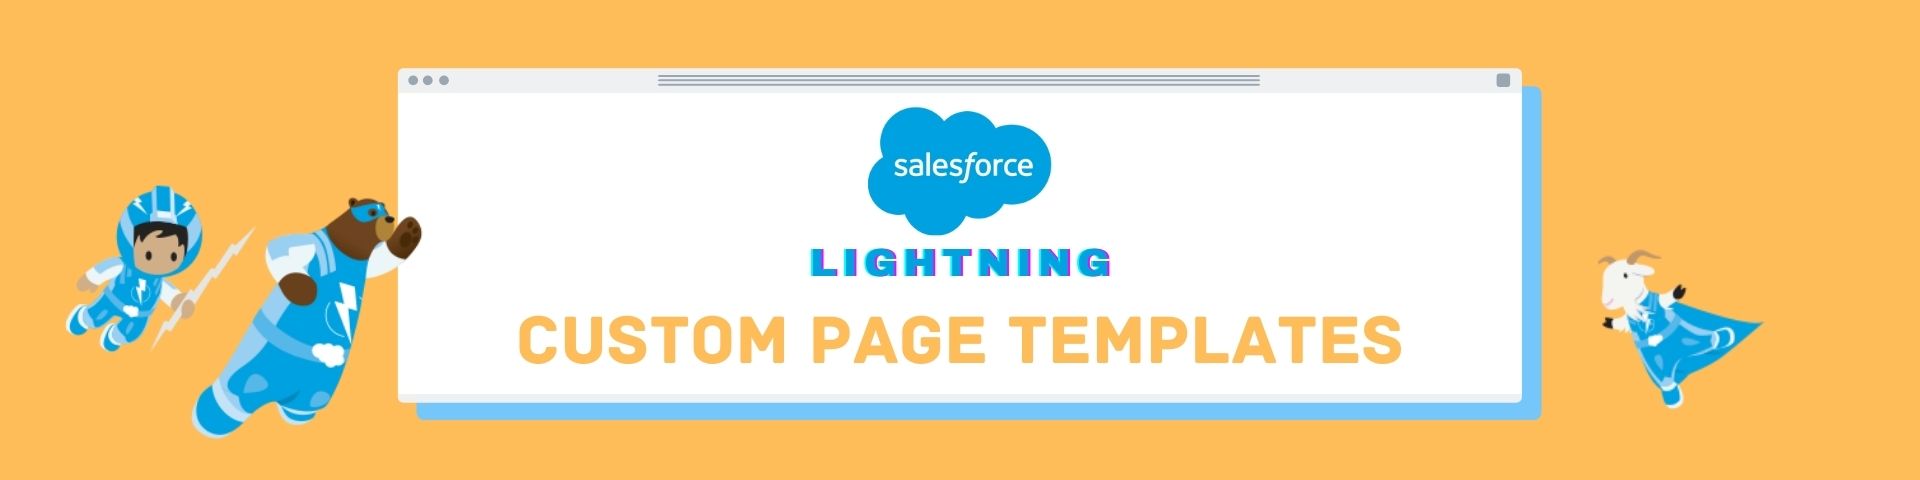 Salesforce Lightning Custom page template